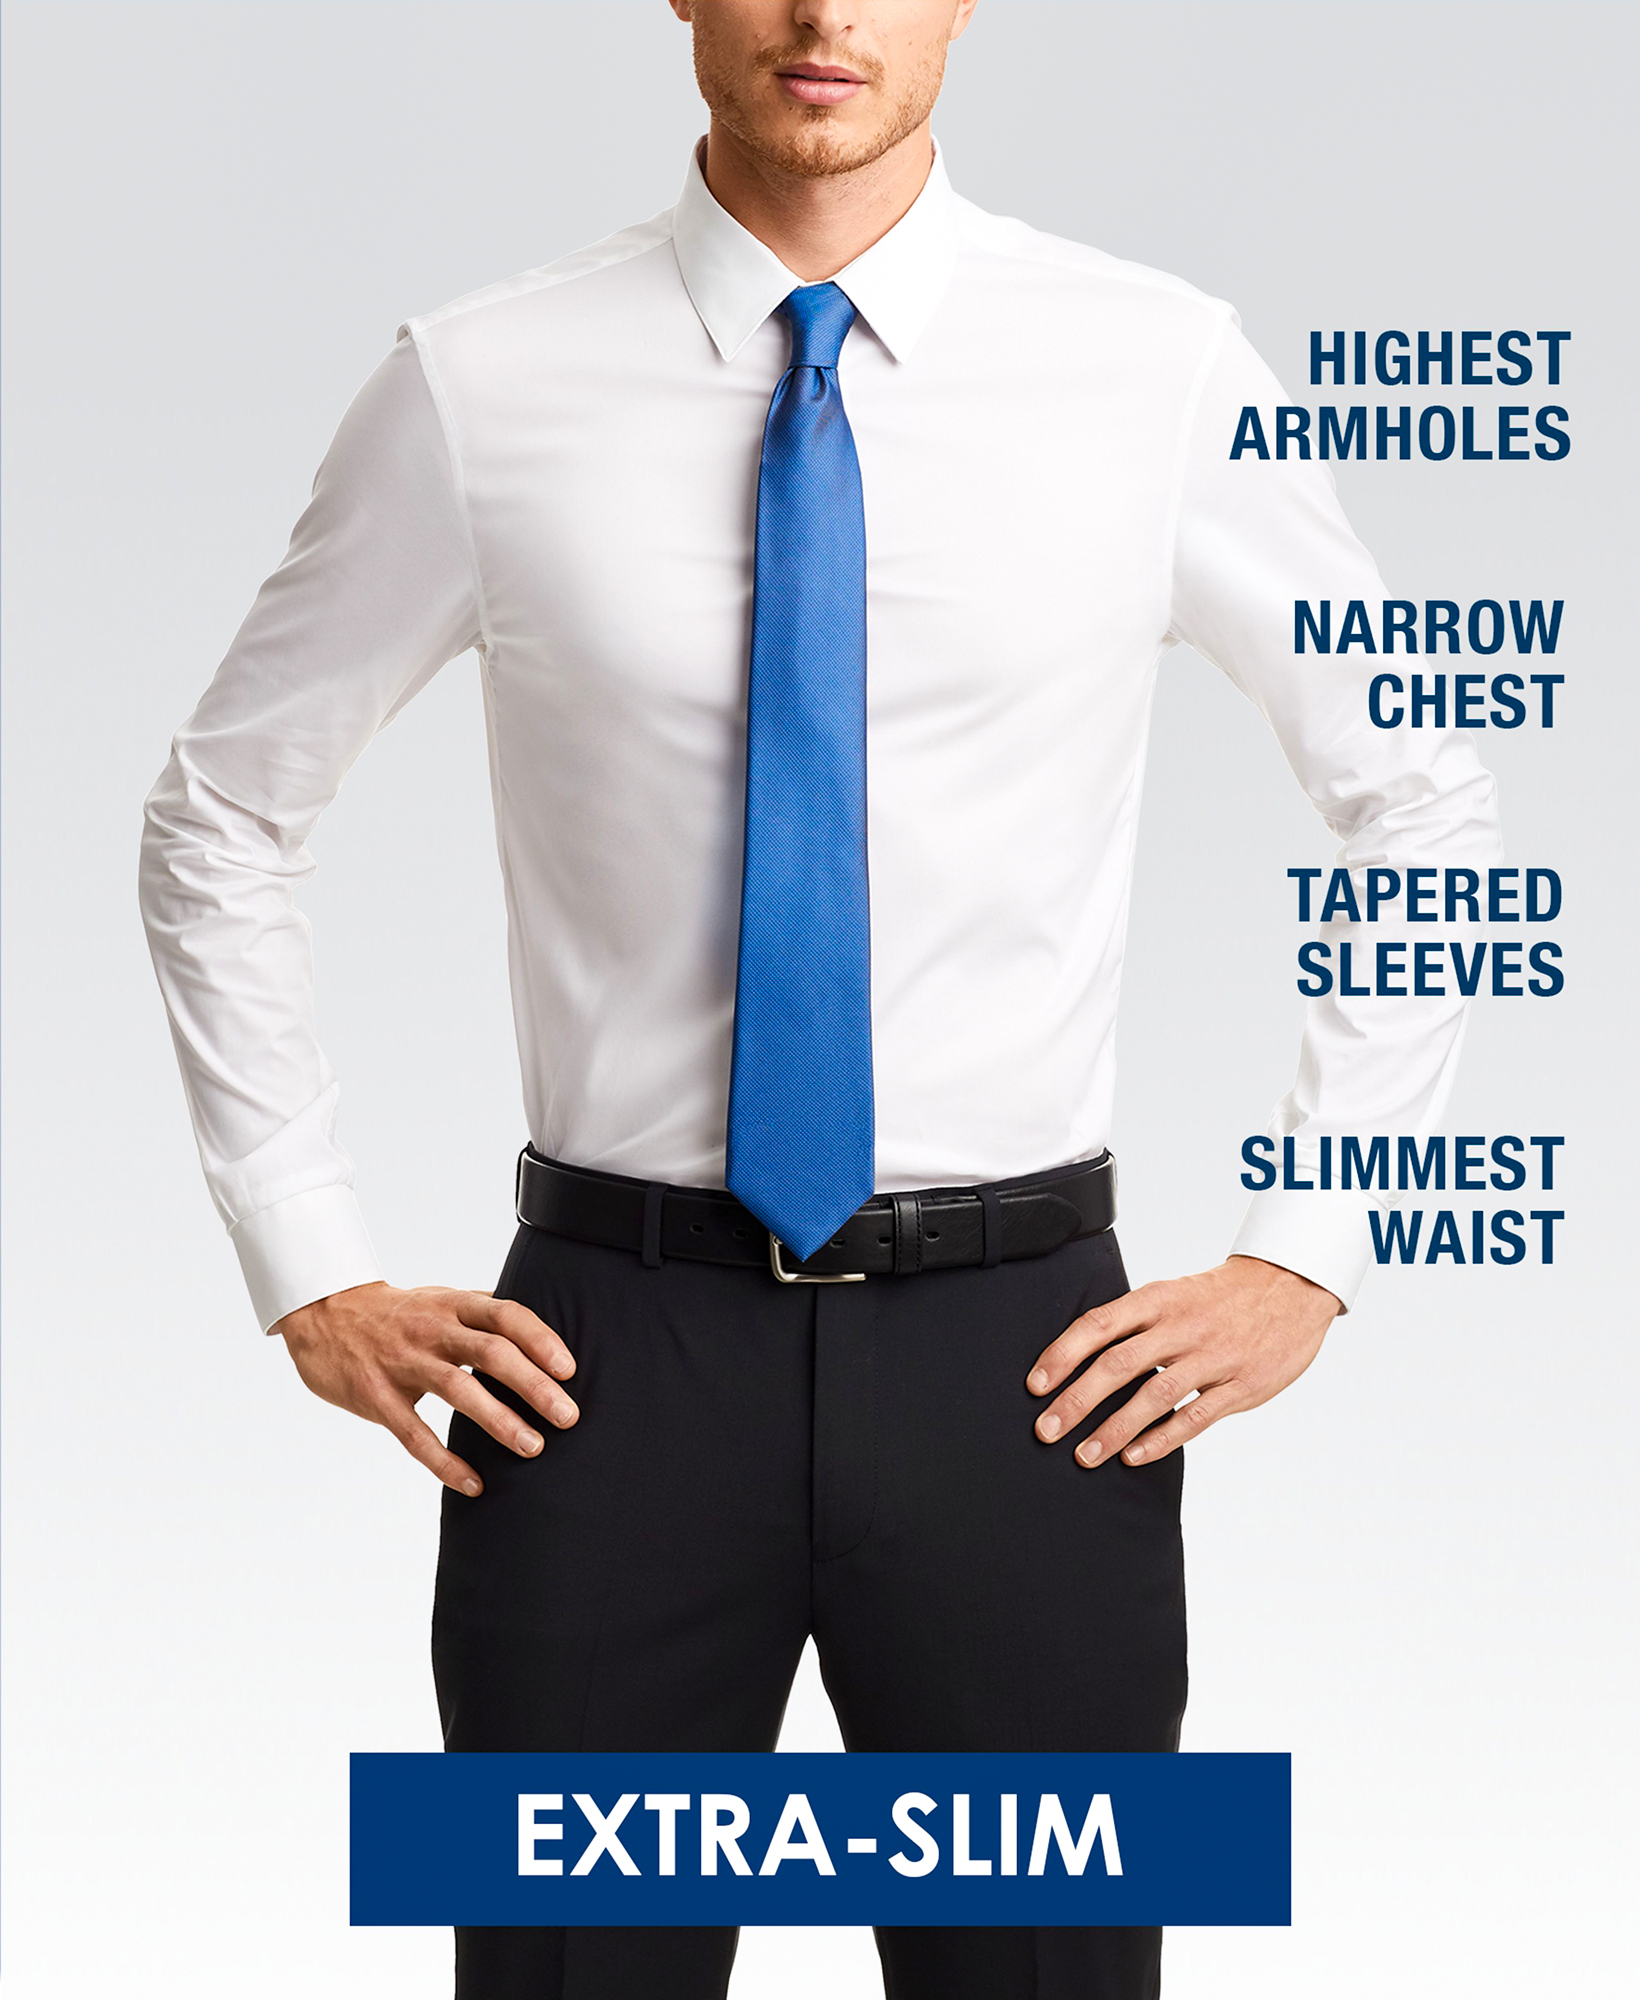 Extra-slim (skinny) fit dress shirt style